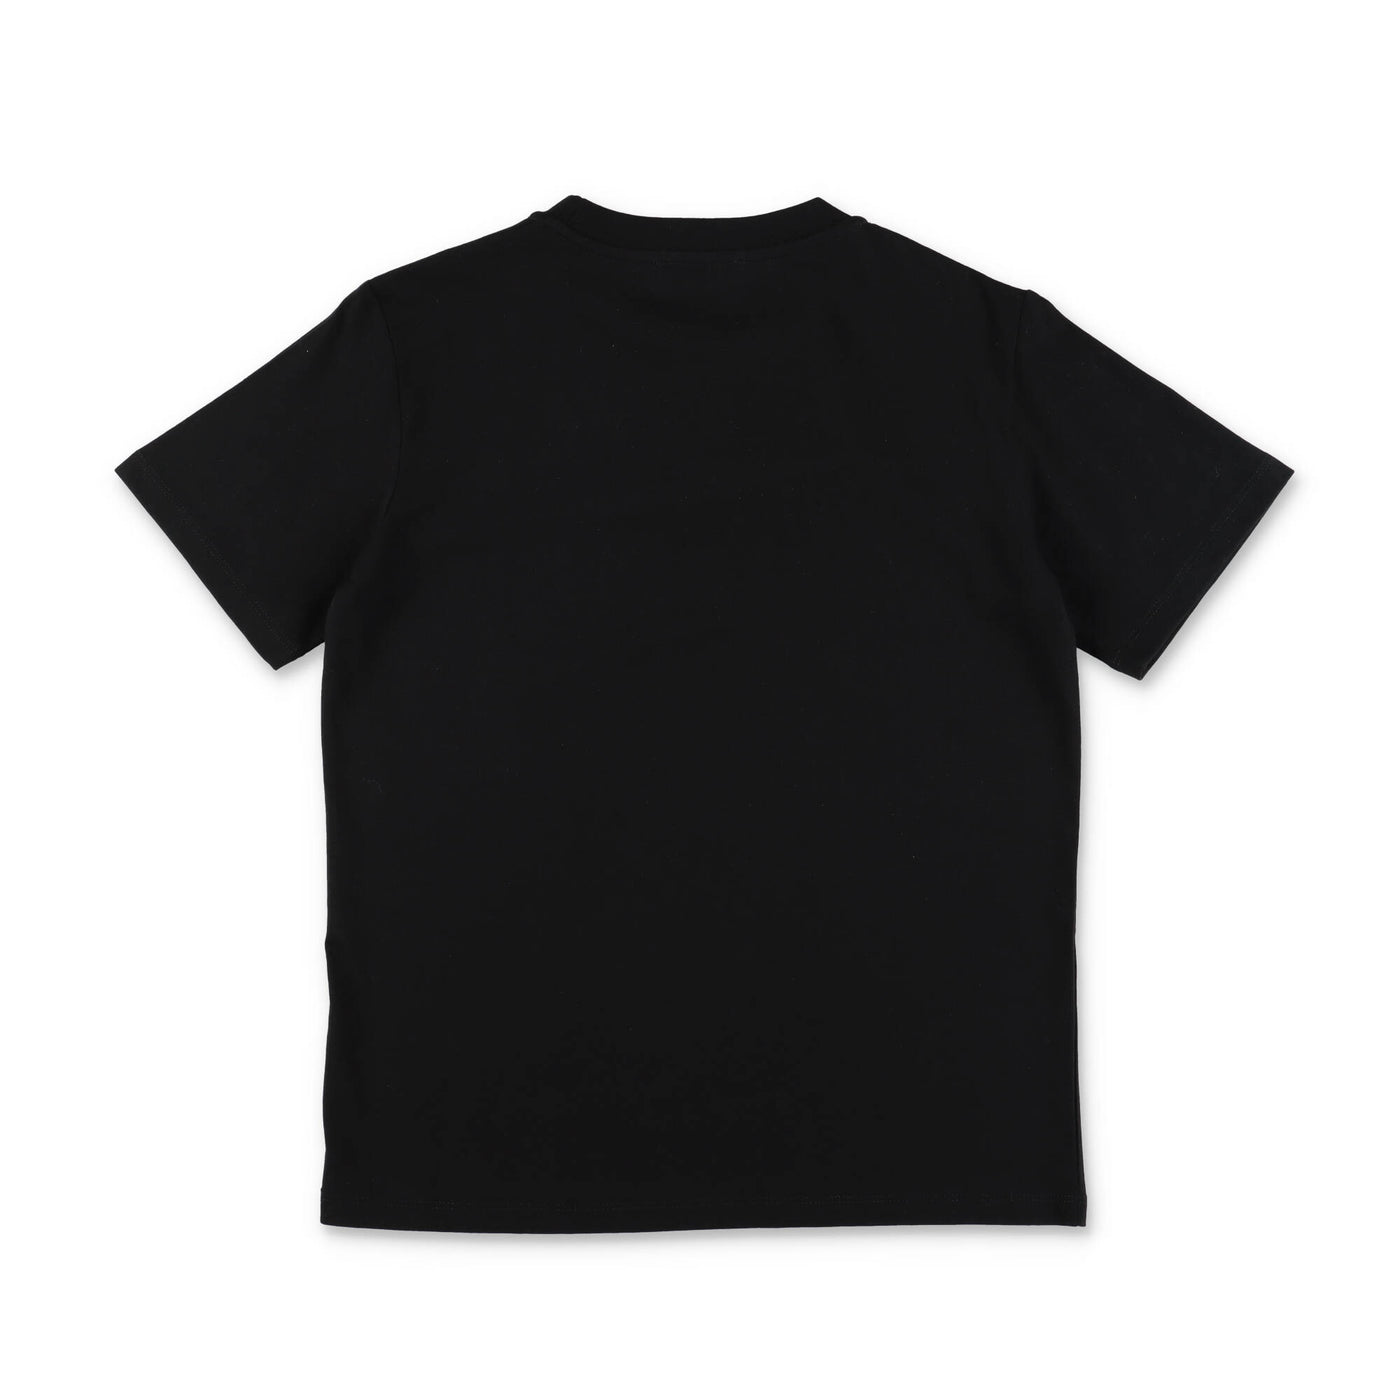 Black cotton jersey boy BALMAIN t-shirt